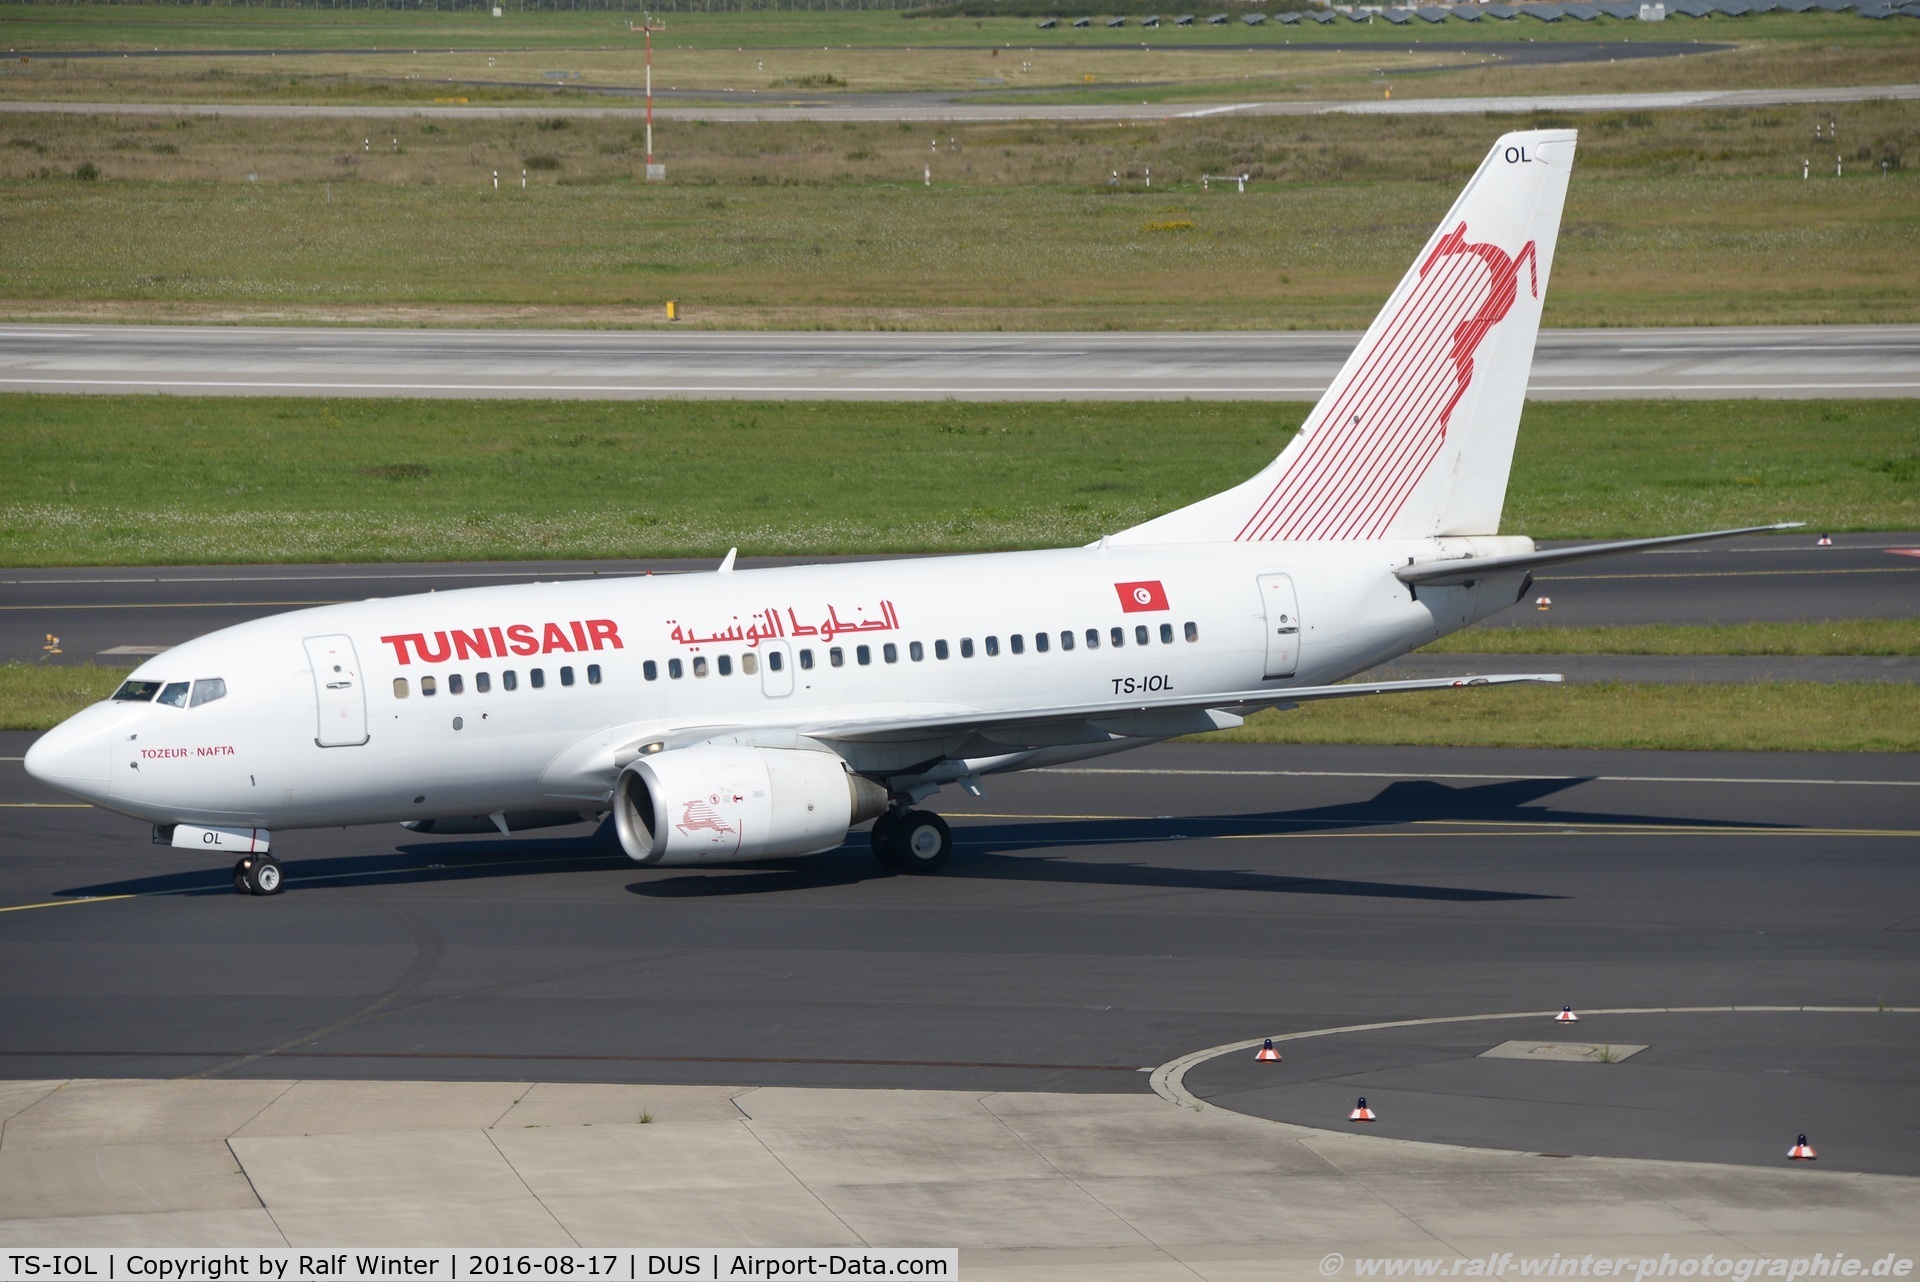 TS-IOL, 1999 Boeing 737-6H3 C/N 29497, Boeing 737-6H3 - TU TAR Tunisair 'Tozeur Nefta' - 29497 - TS-IOL - 17.08.2016 - DUS